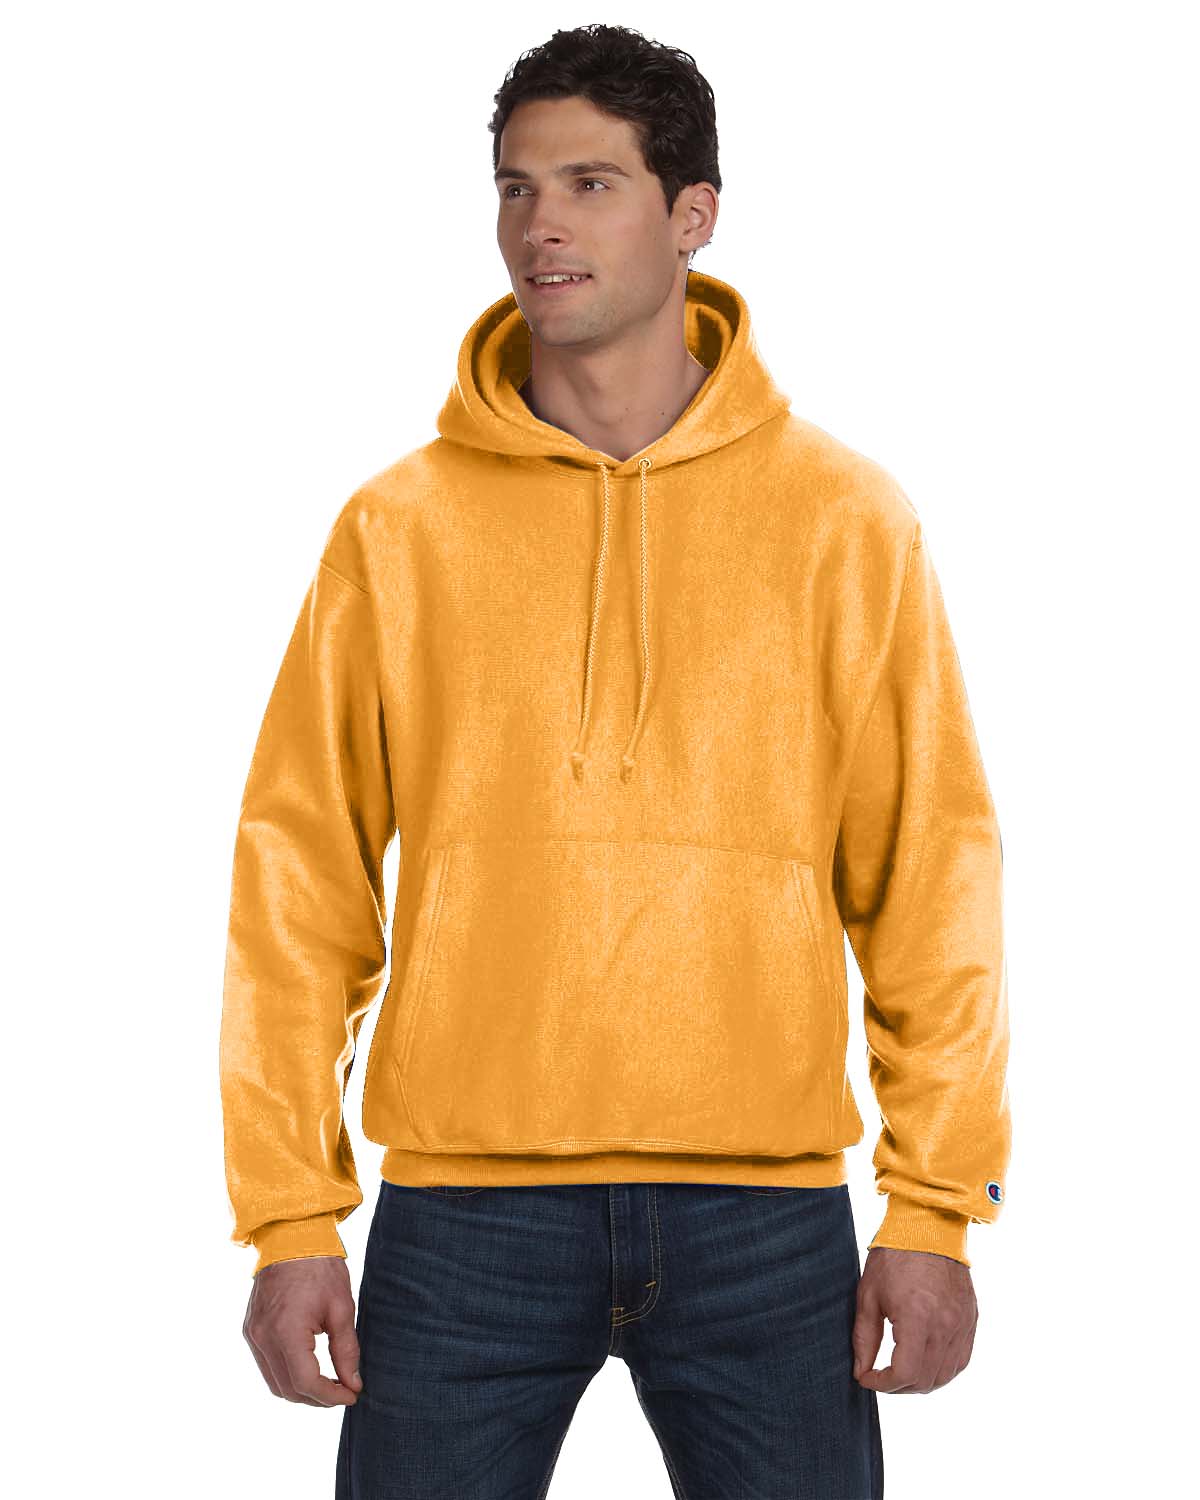 c gold champion hoodie